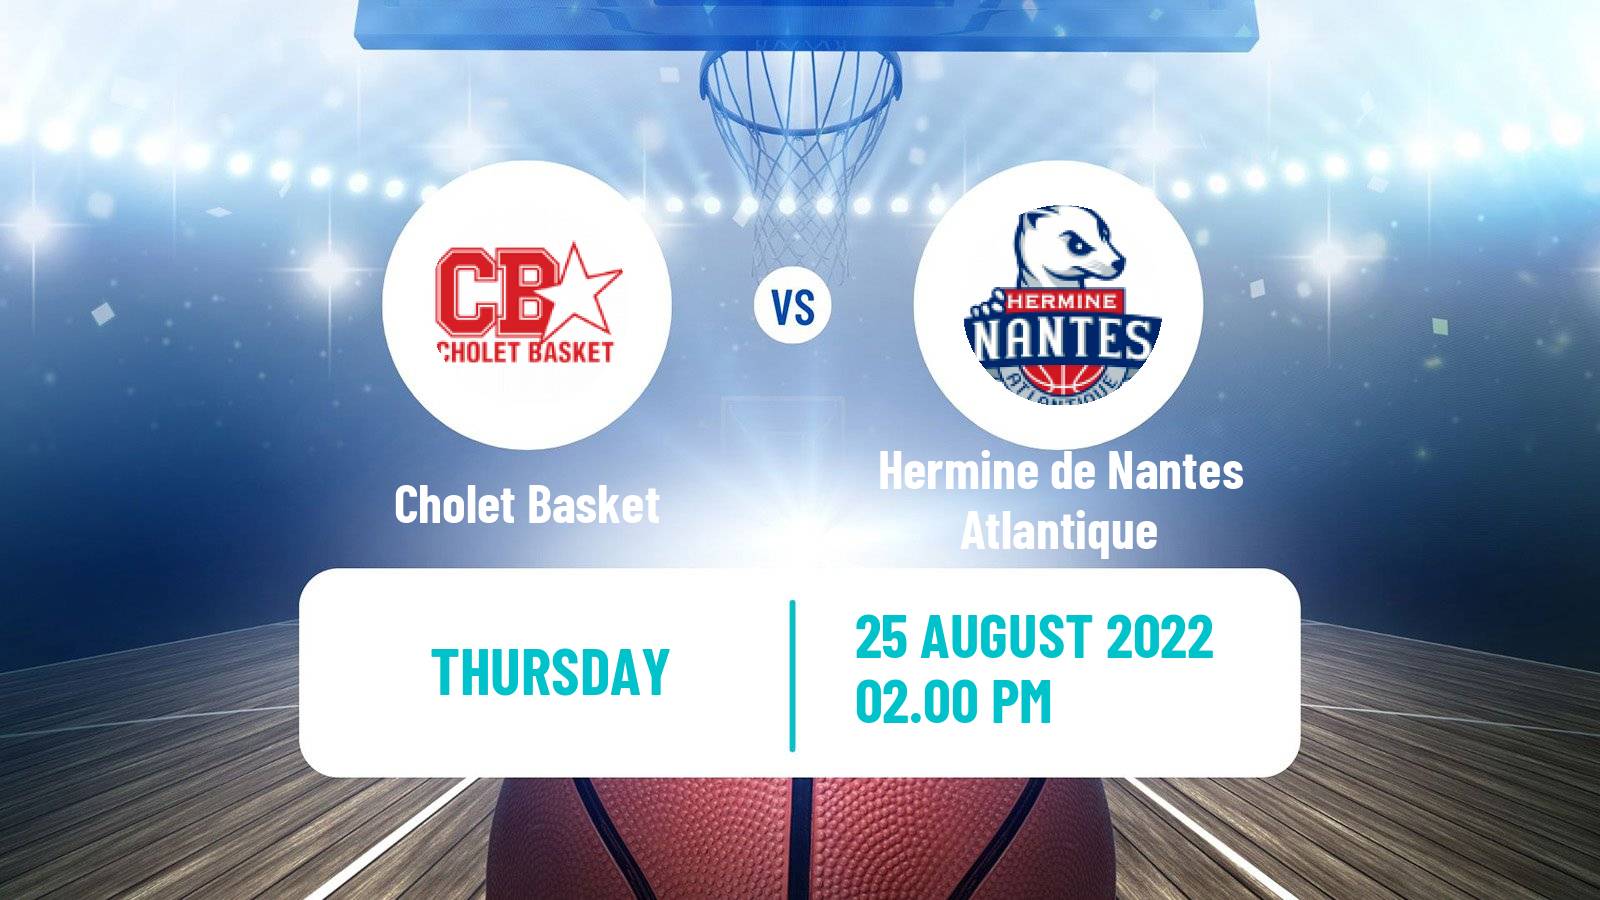 Basketball Club Friendly Basketball Cholet Basket - Hermine de Nantes Atlantique